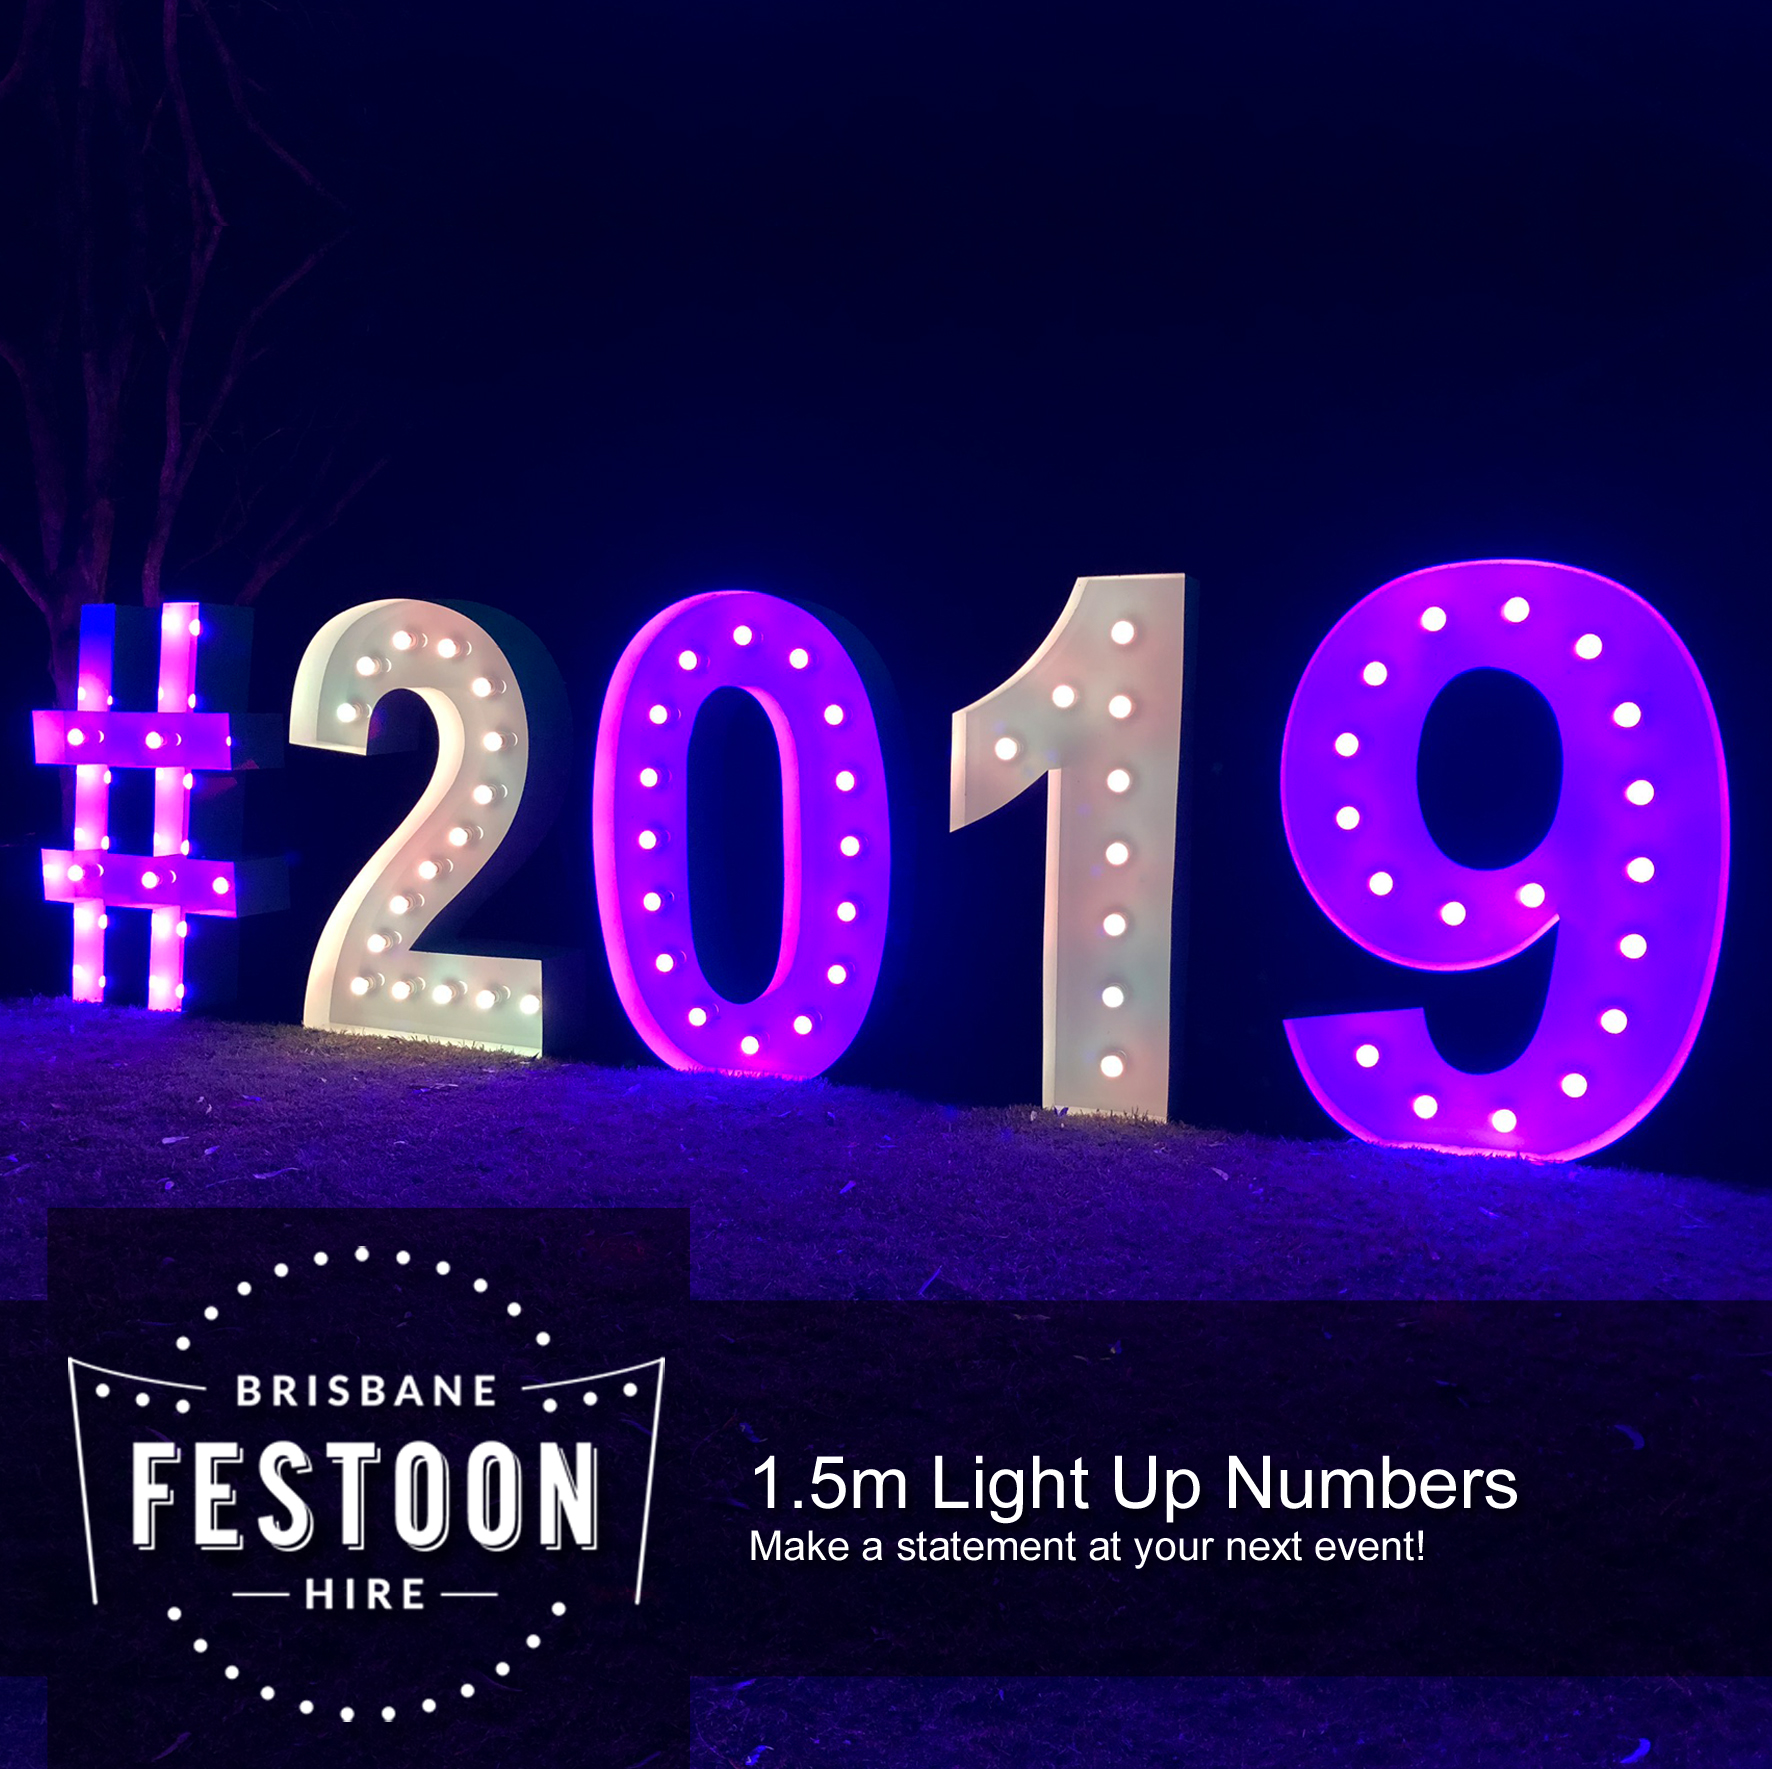 Brisbane Festoon Hire - Light Up Number Hire.jpg